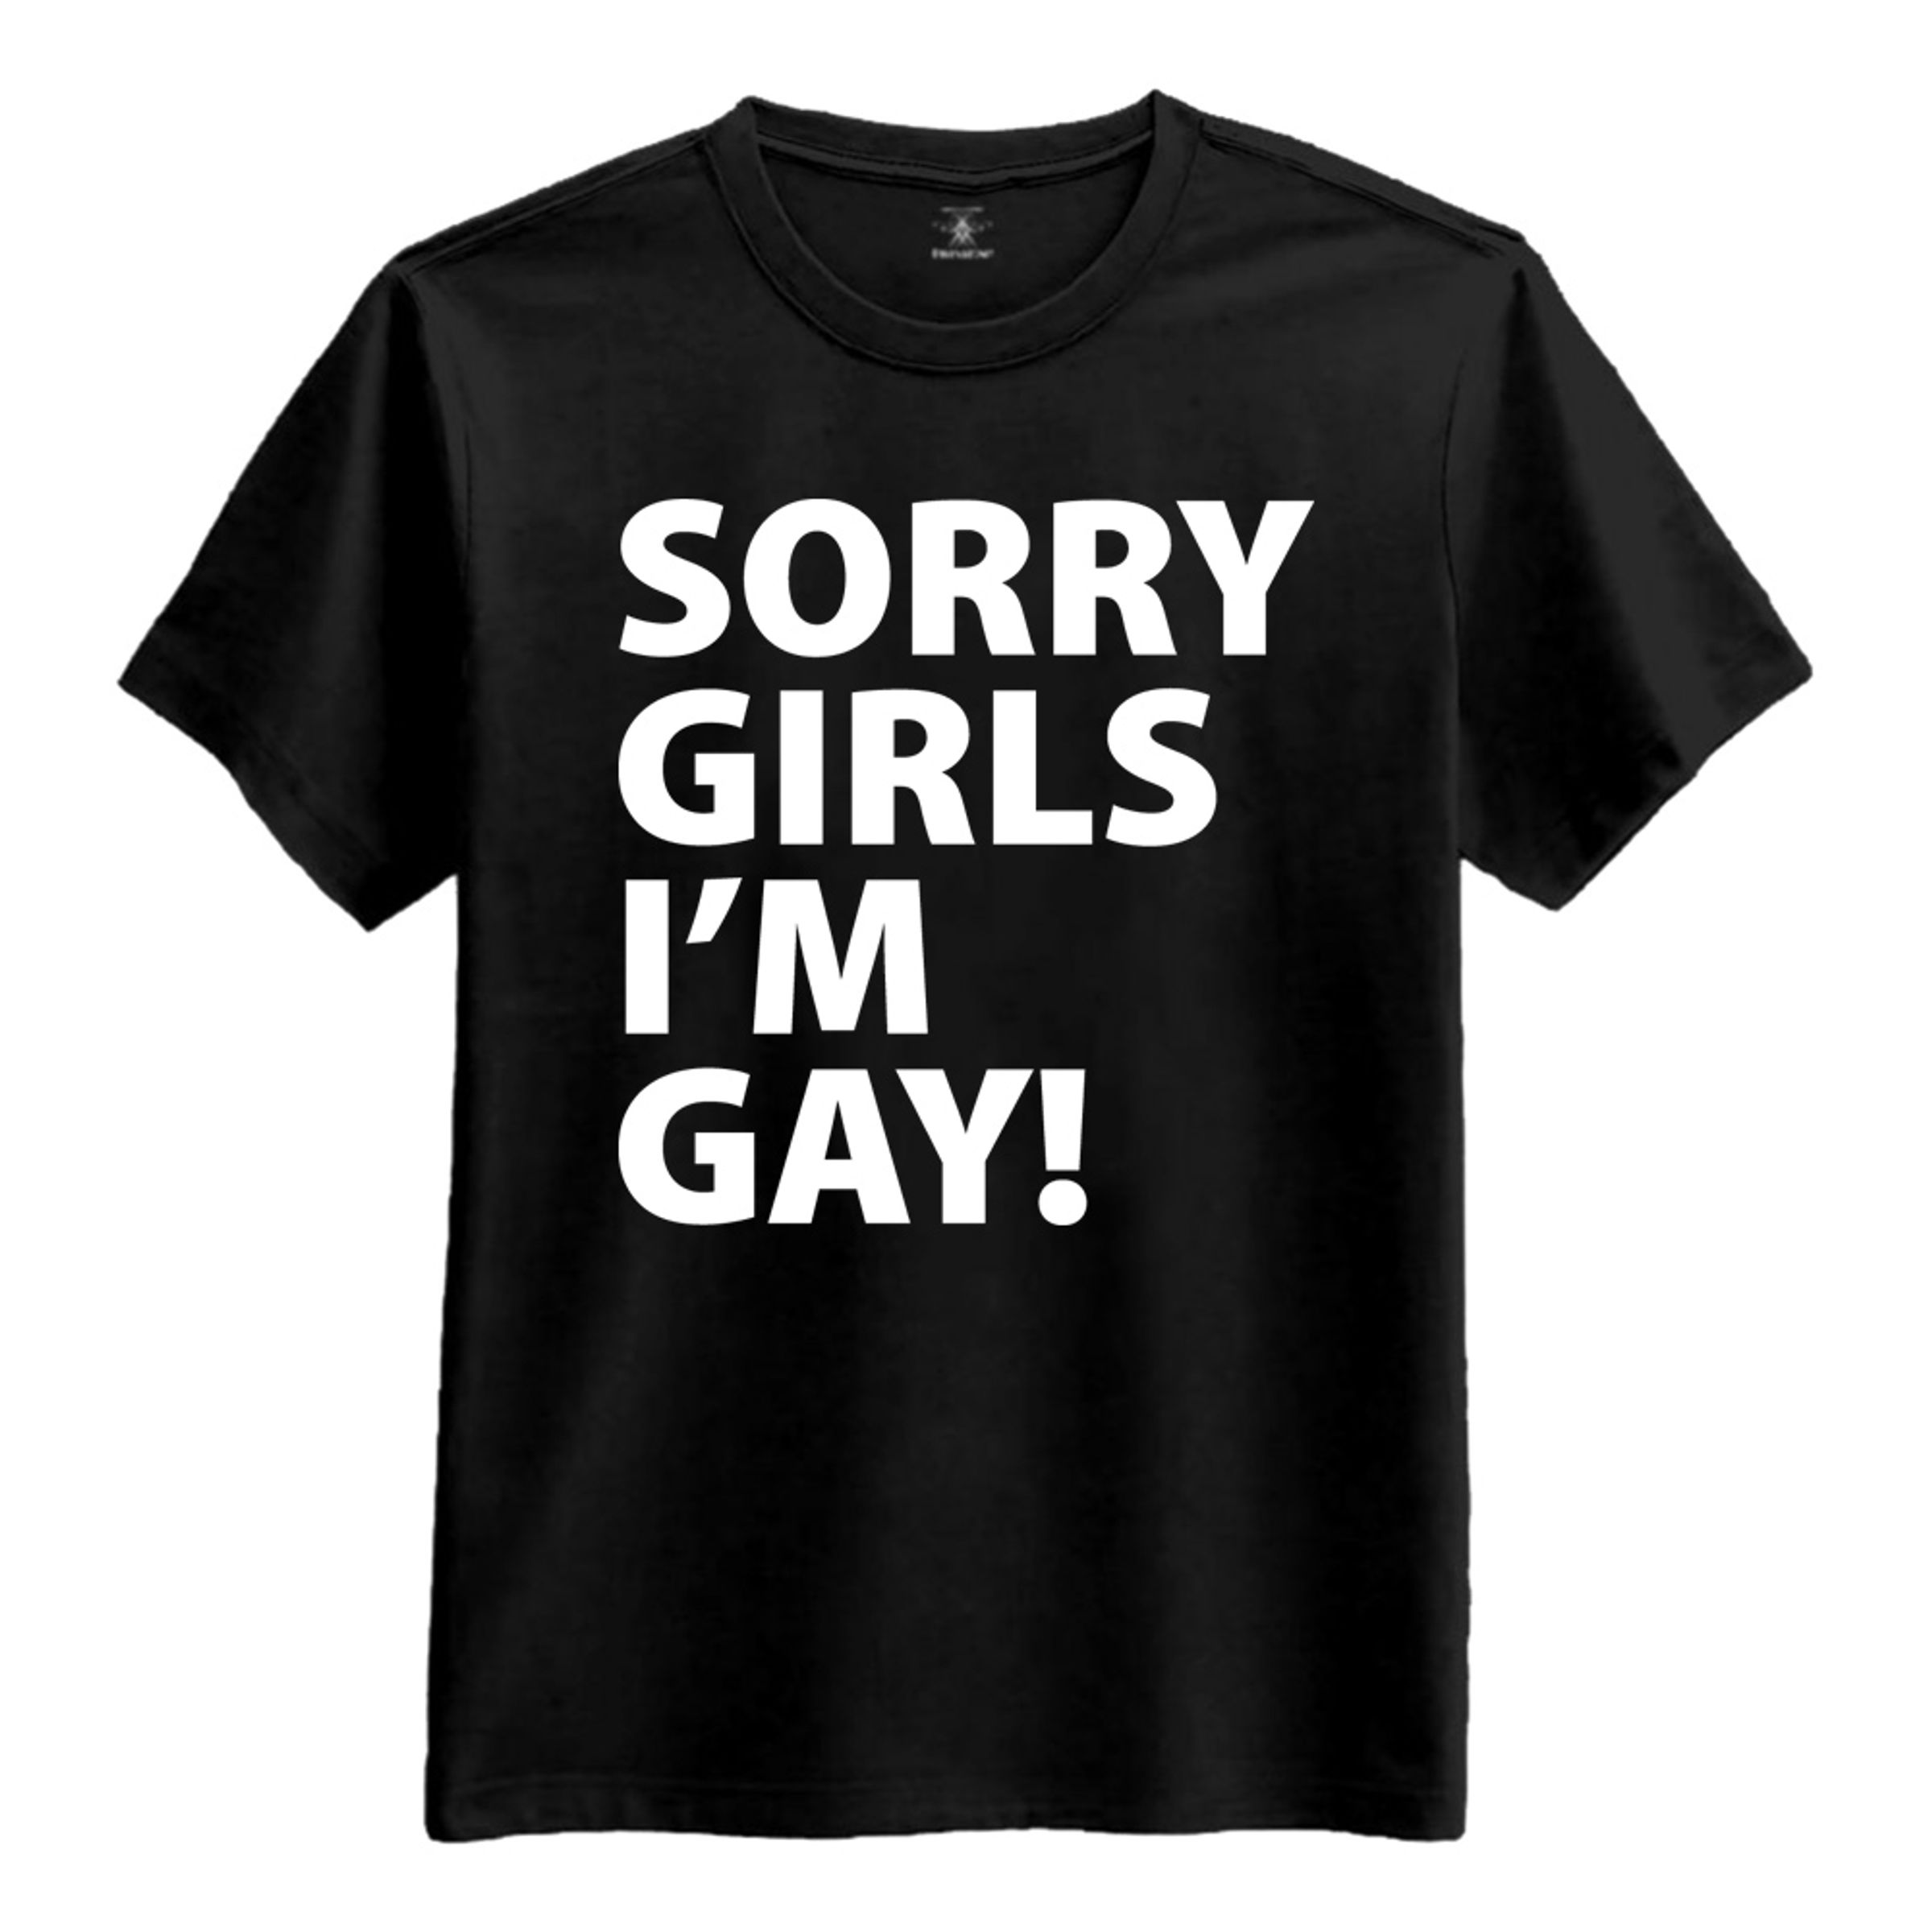 Sorry Girls I'm Gay T-shirt - Small